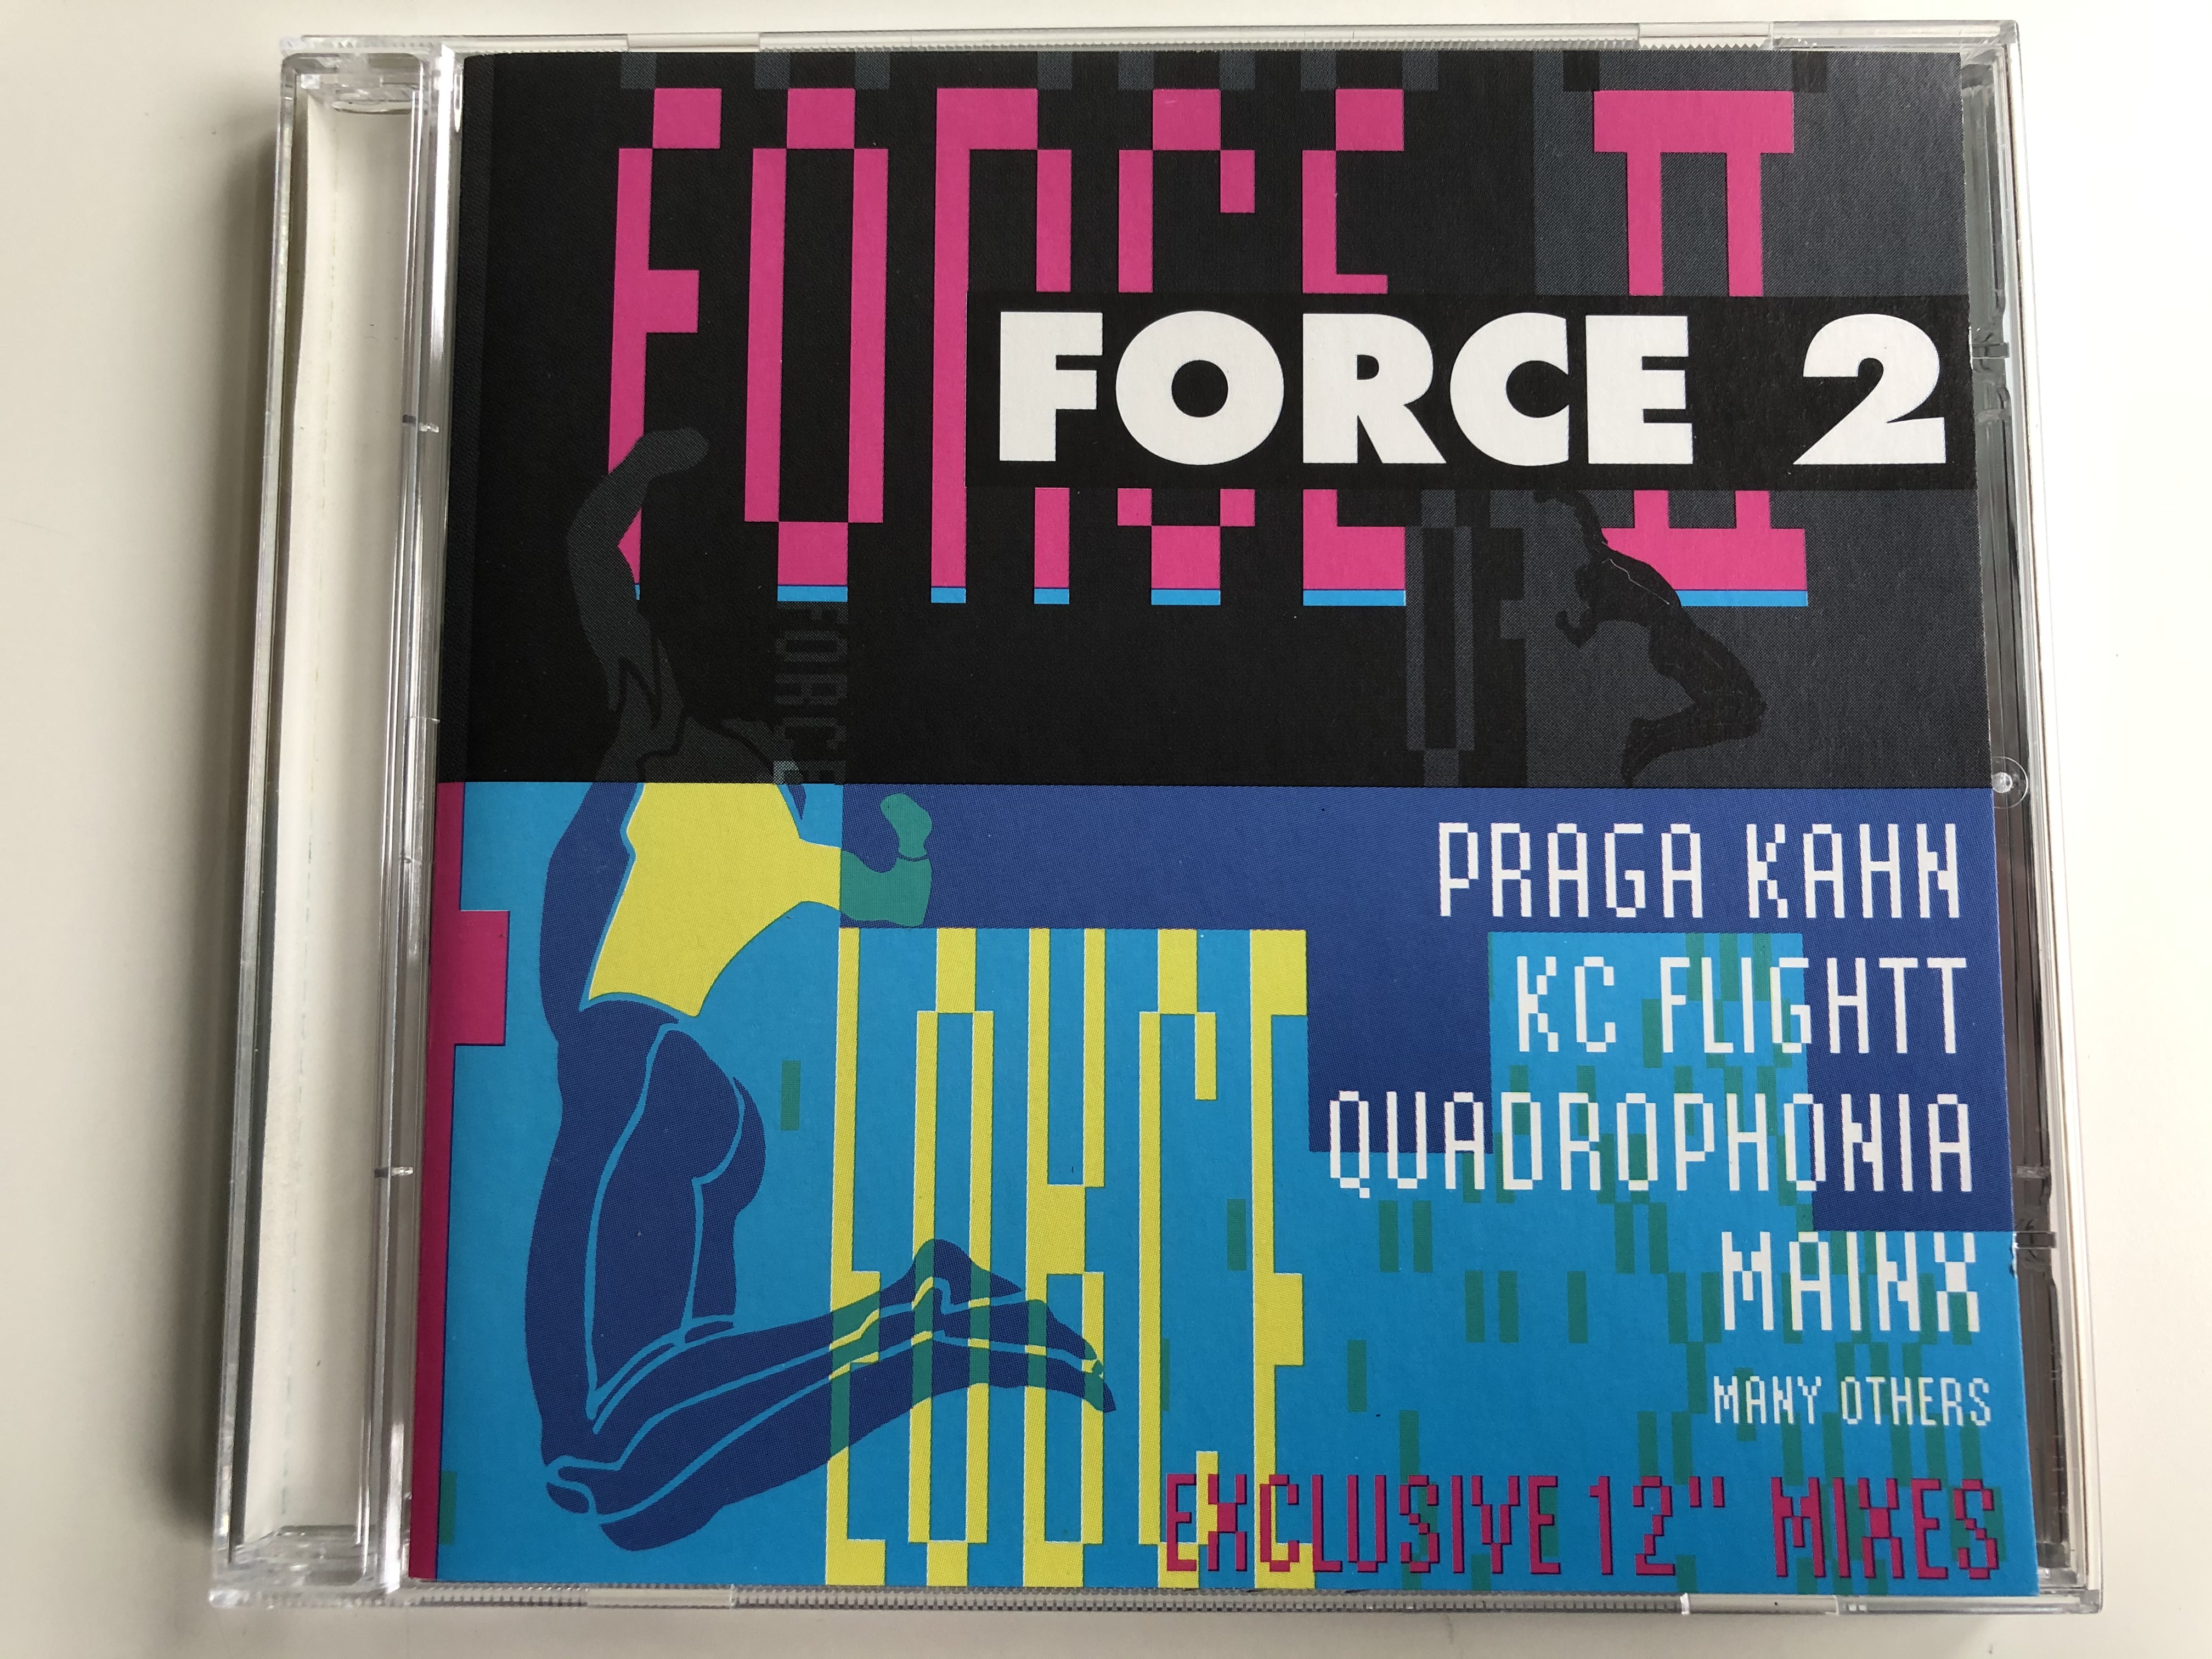 force-2-praga-khan-kc-flightt-quadrophonia-mainx-many-others-exclusive-12-mixes-ars-productions-audio-cd-1992-472059-2-1-.jpg